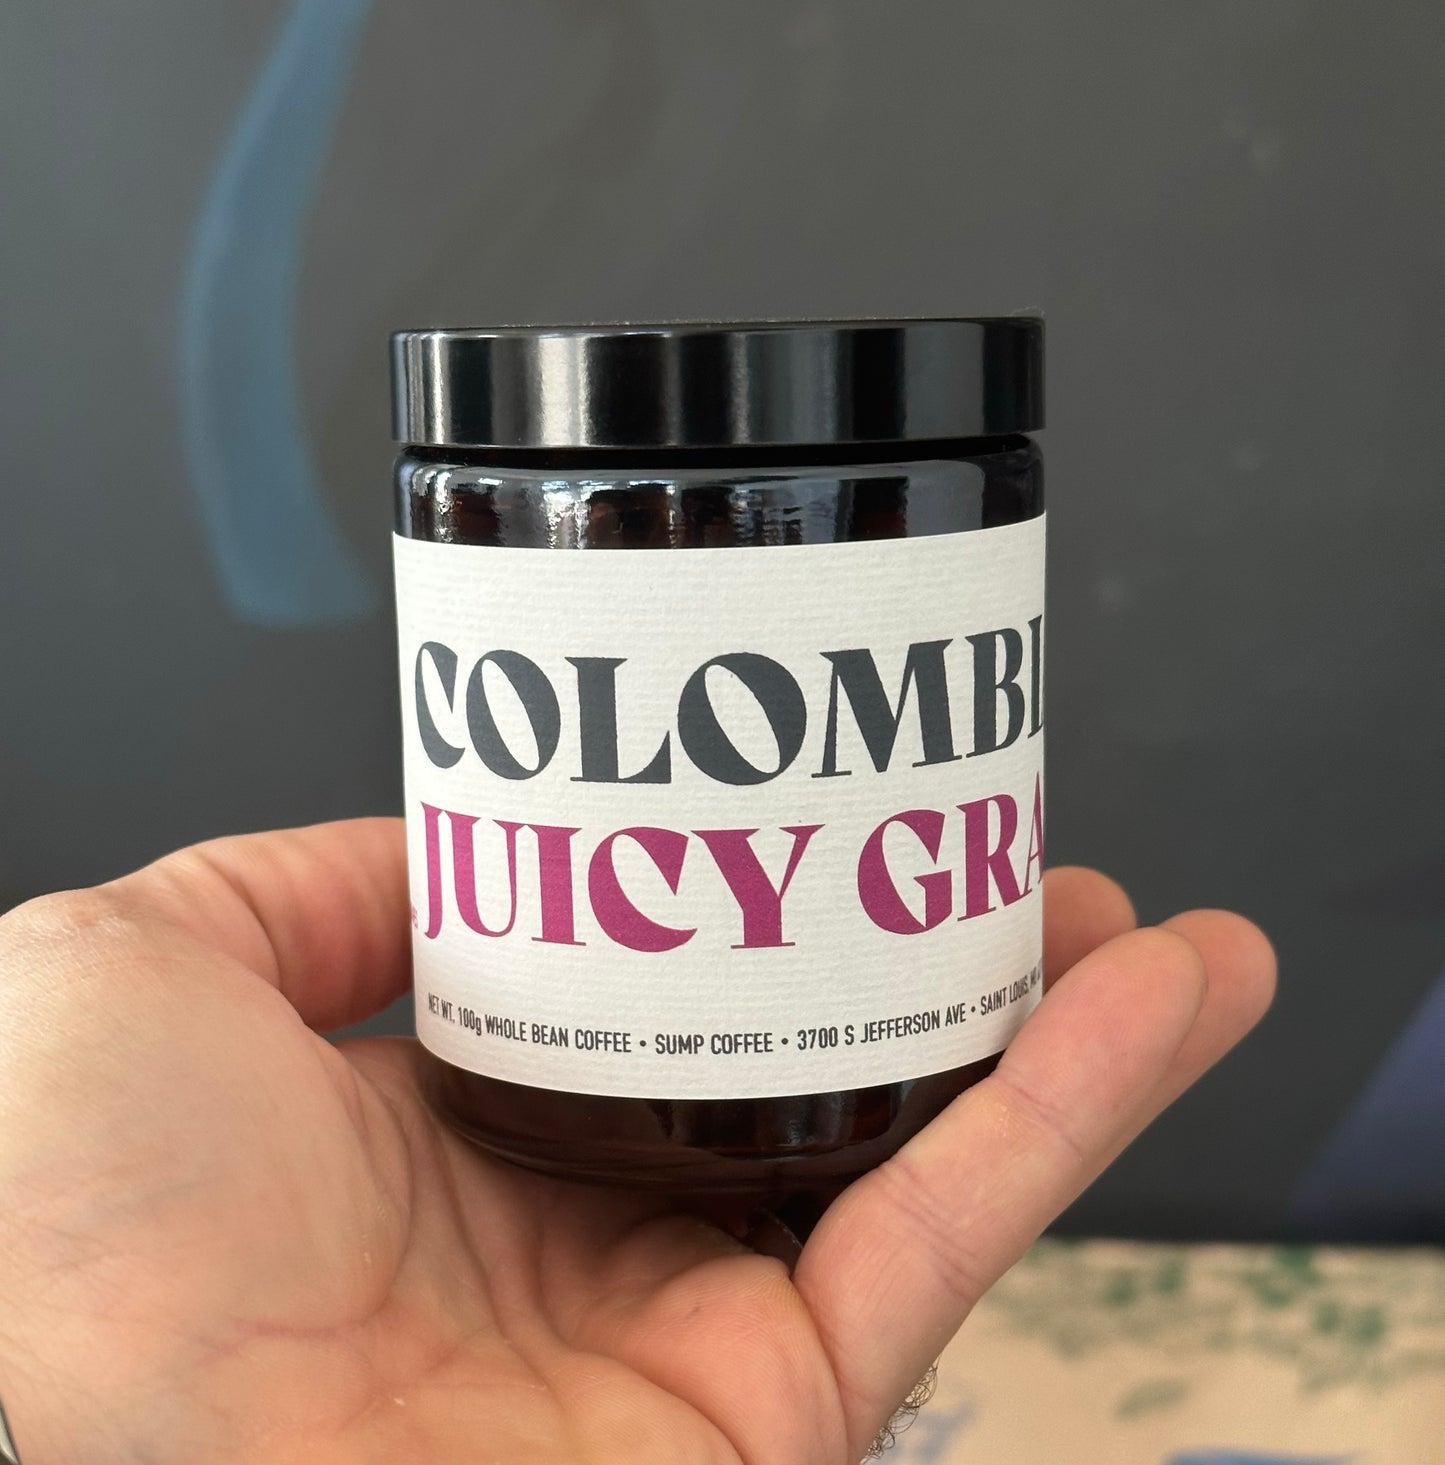 COLOMBIA Juicy Grape